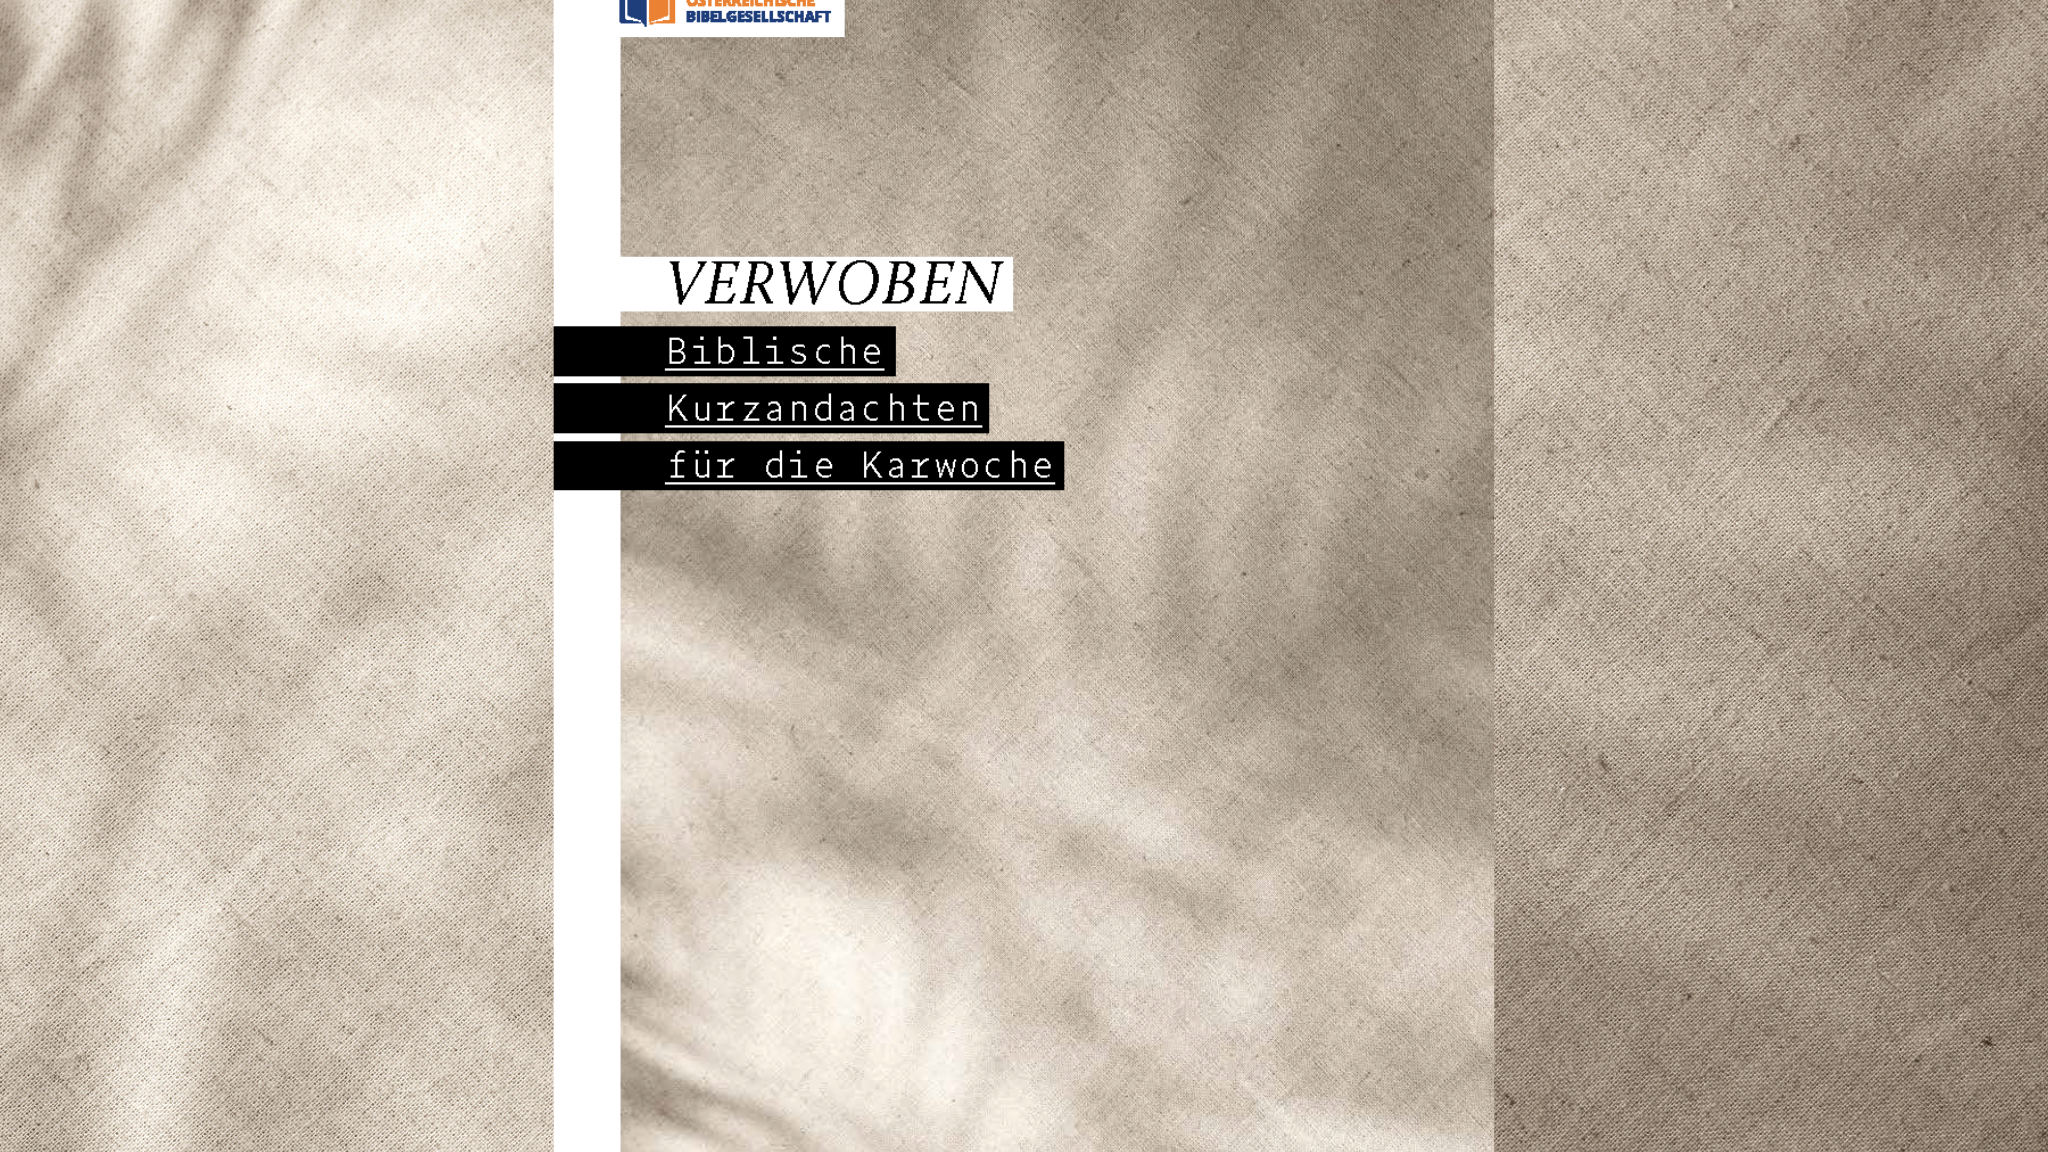 Das Cover der Osterbibellese "Verwoben"